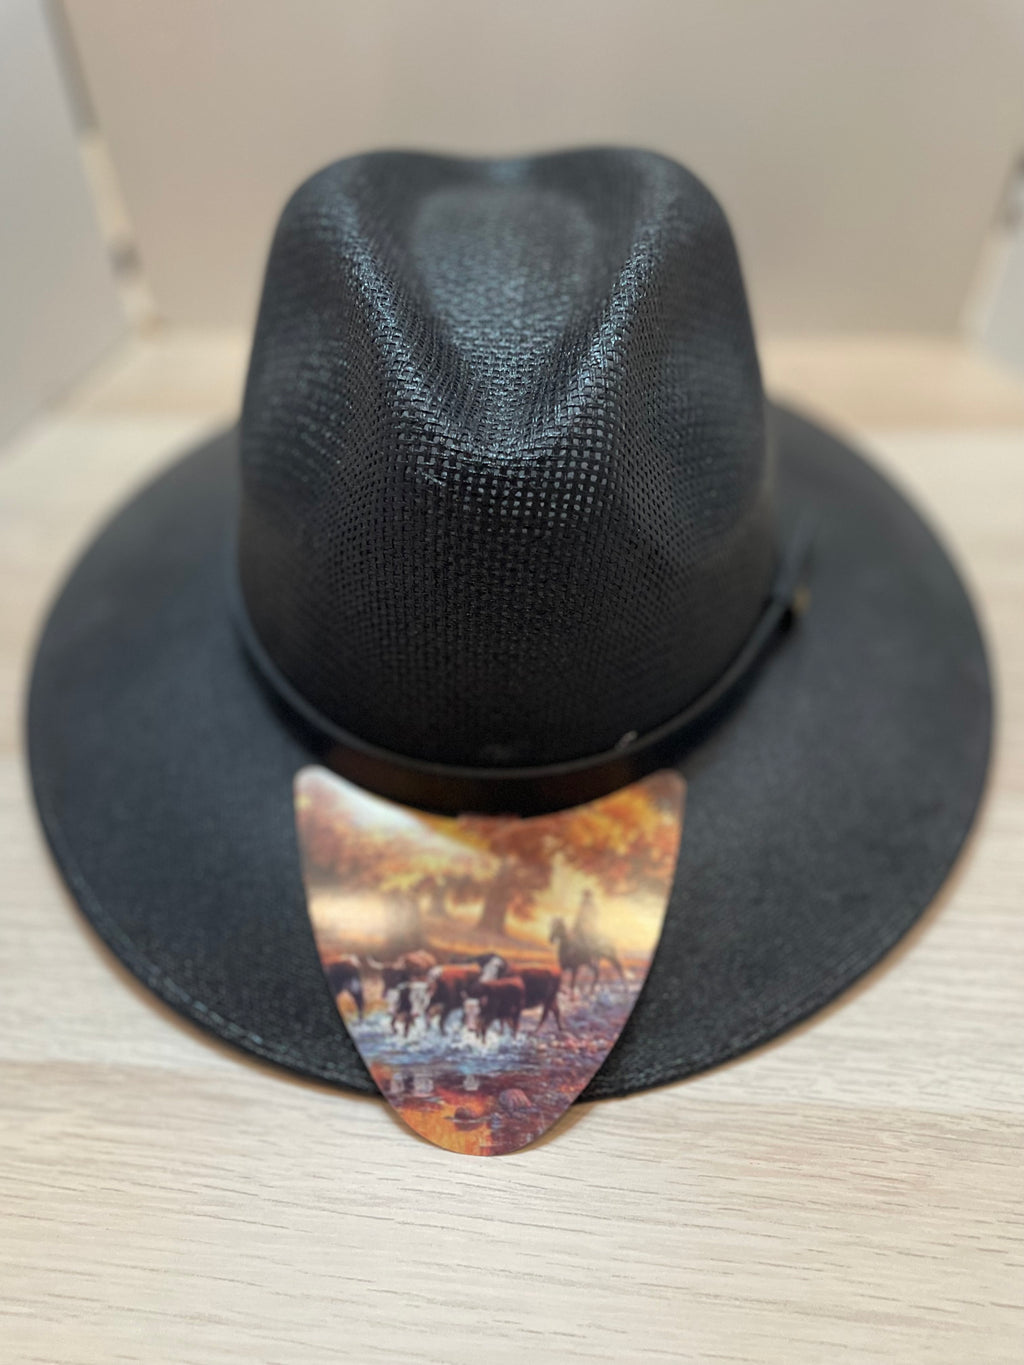 Black Wide Brim Panama Hat